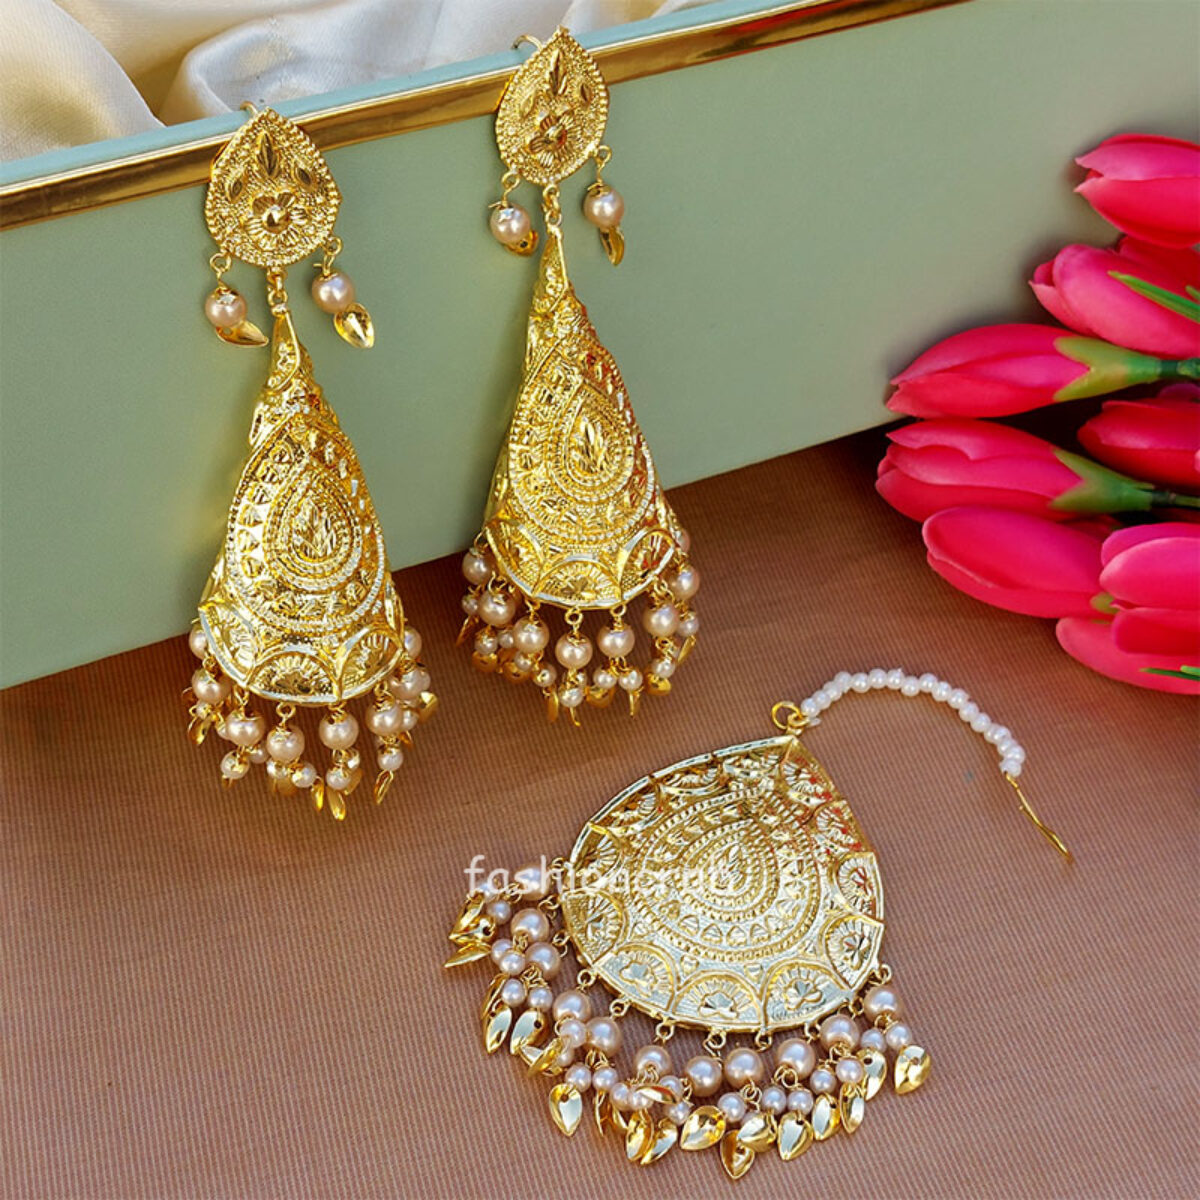 Maang Tikka and Earring Set Indian Jewelry Polki - Etsy